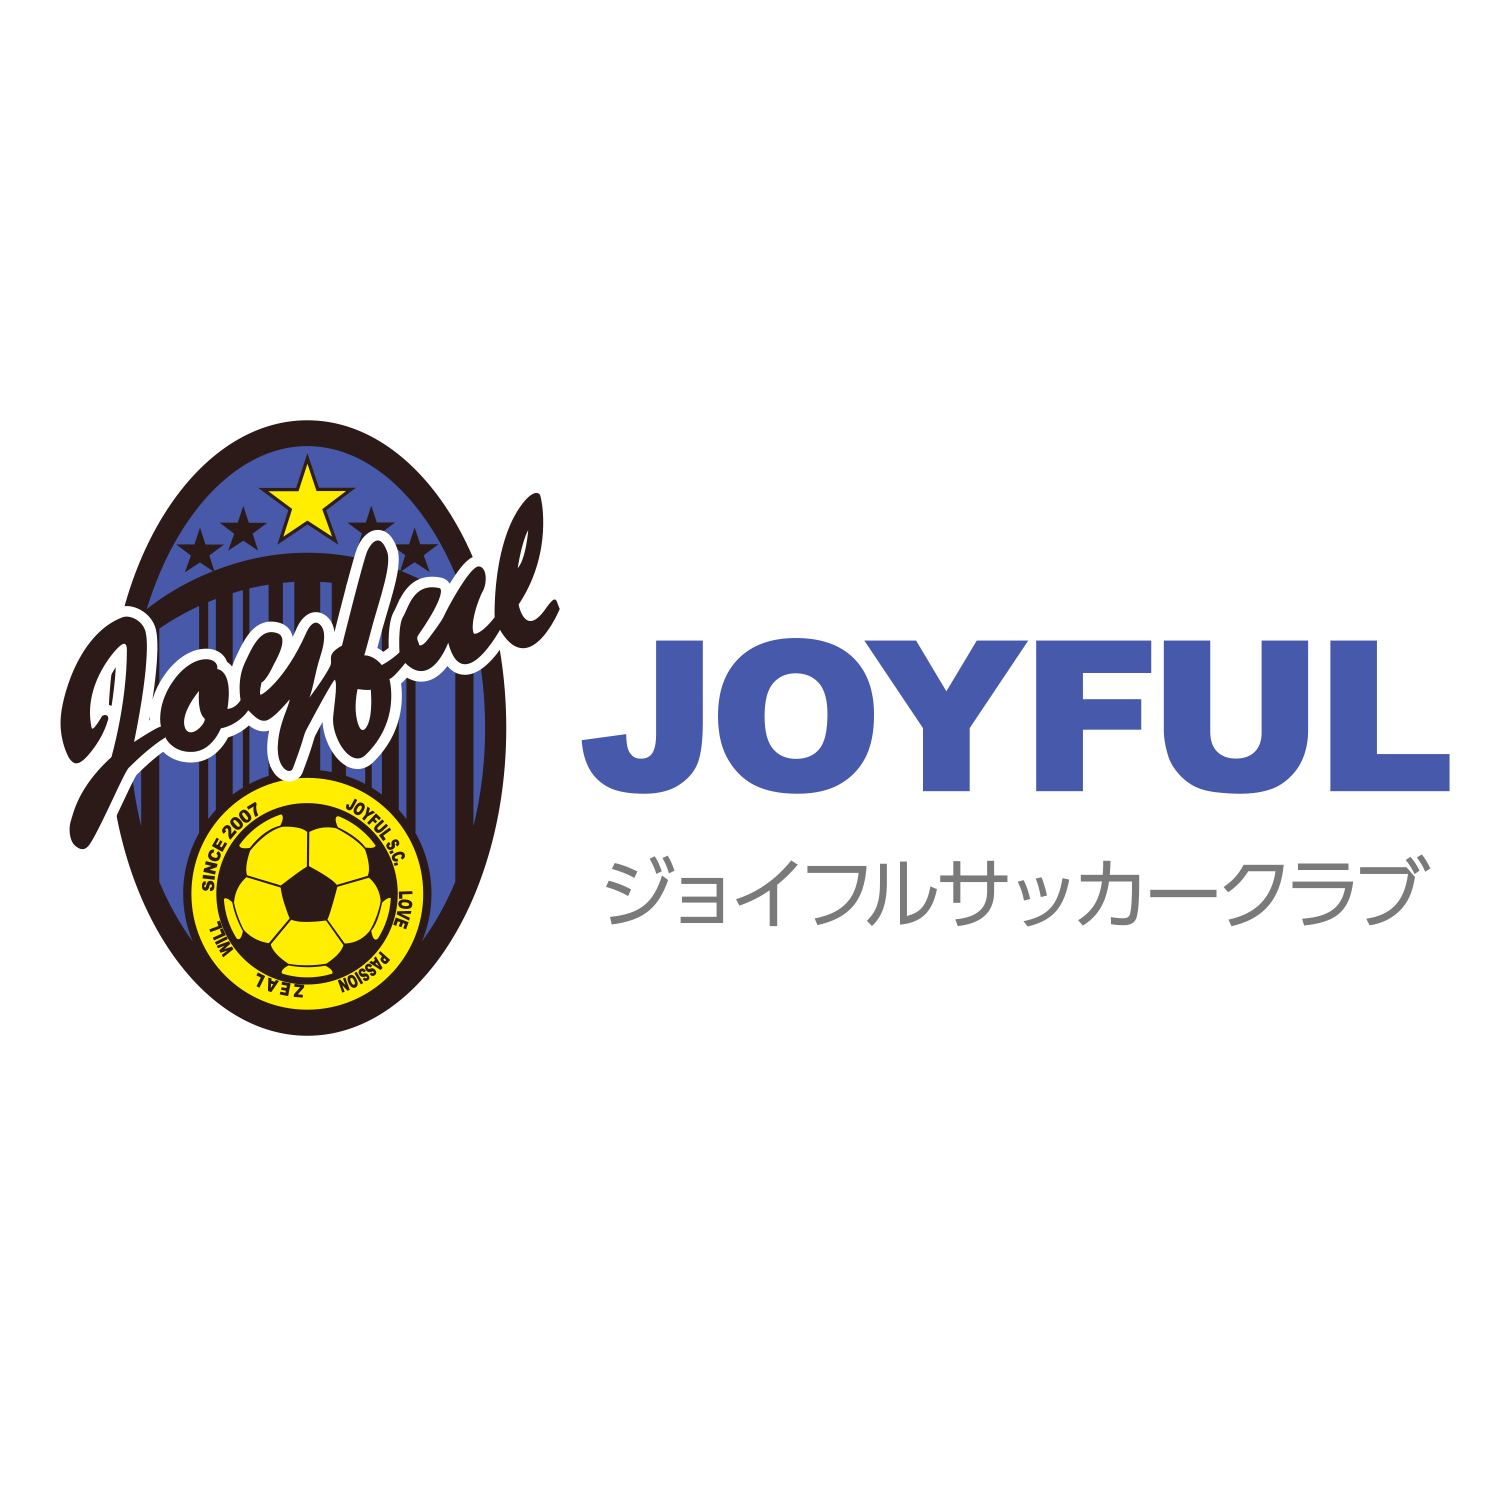 Joyfulサッカークラブ 群馬県 栃木県 茨城県 新潟県 長野県 富山県 山梨県 石川県で活動する子ども 小学生のサッカースクールです